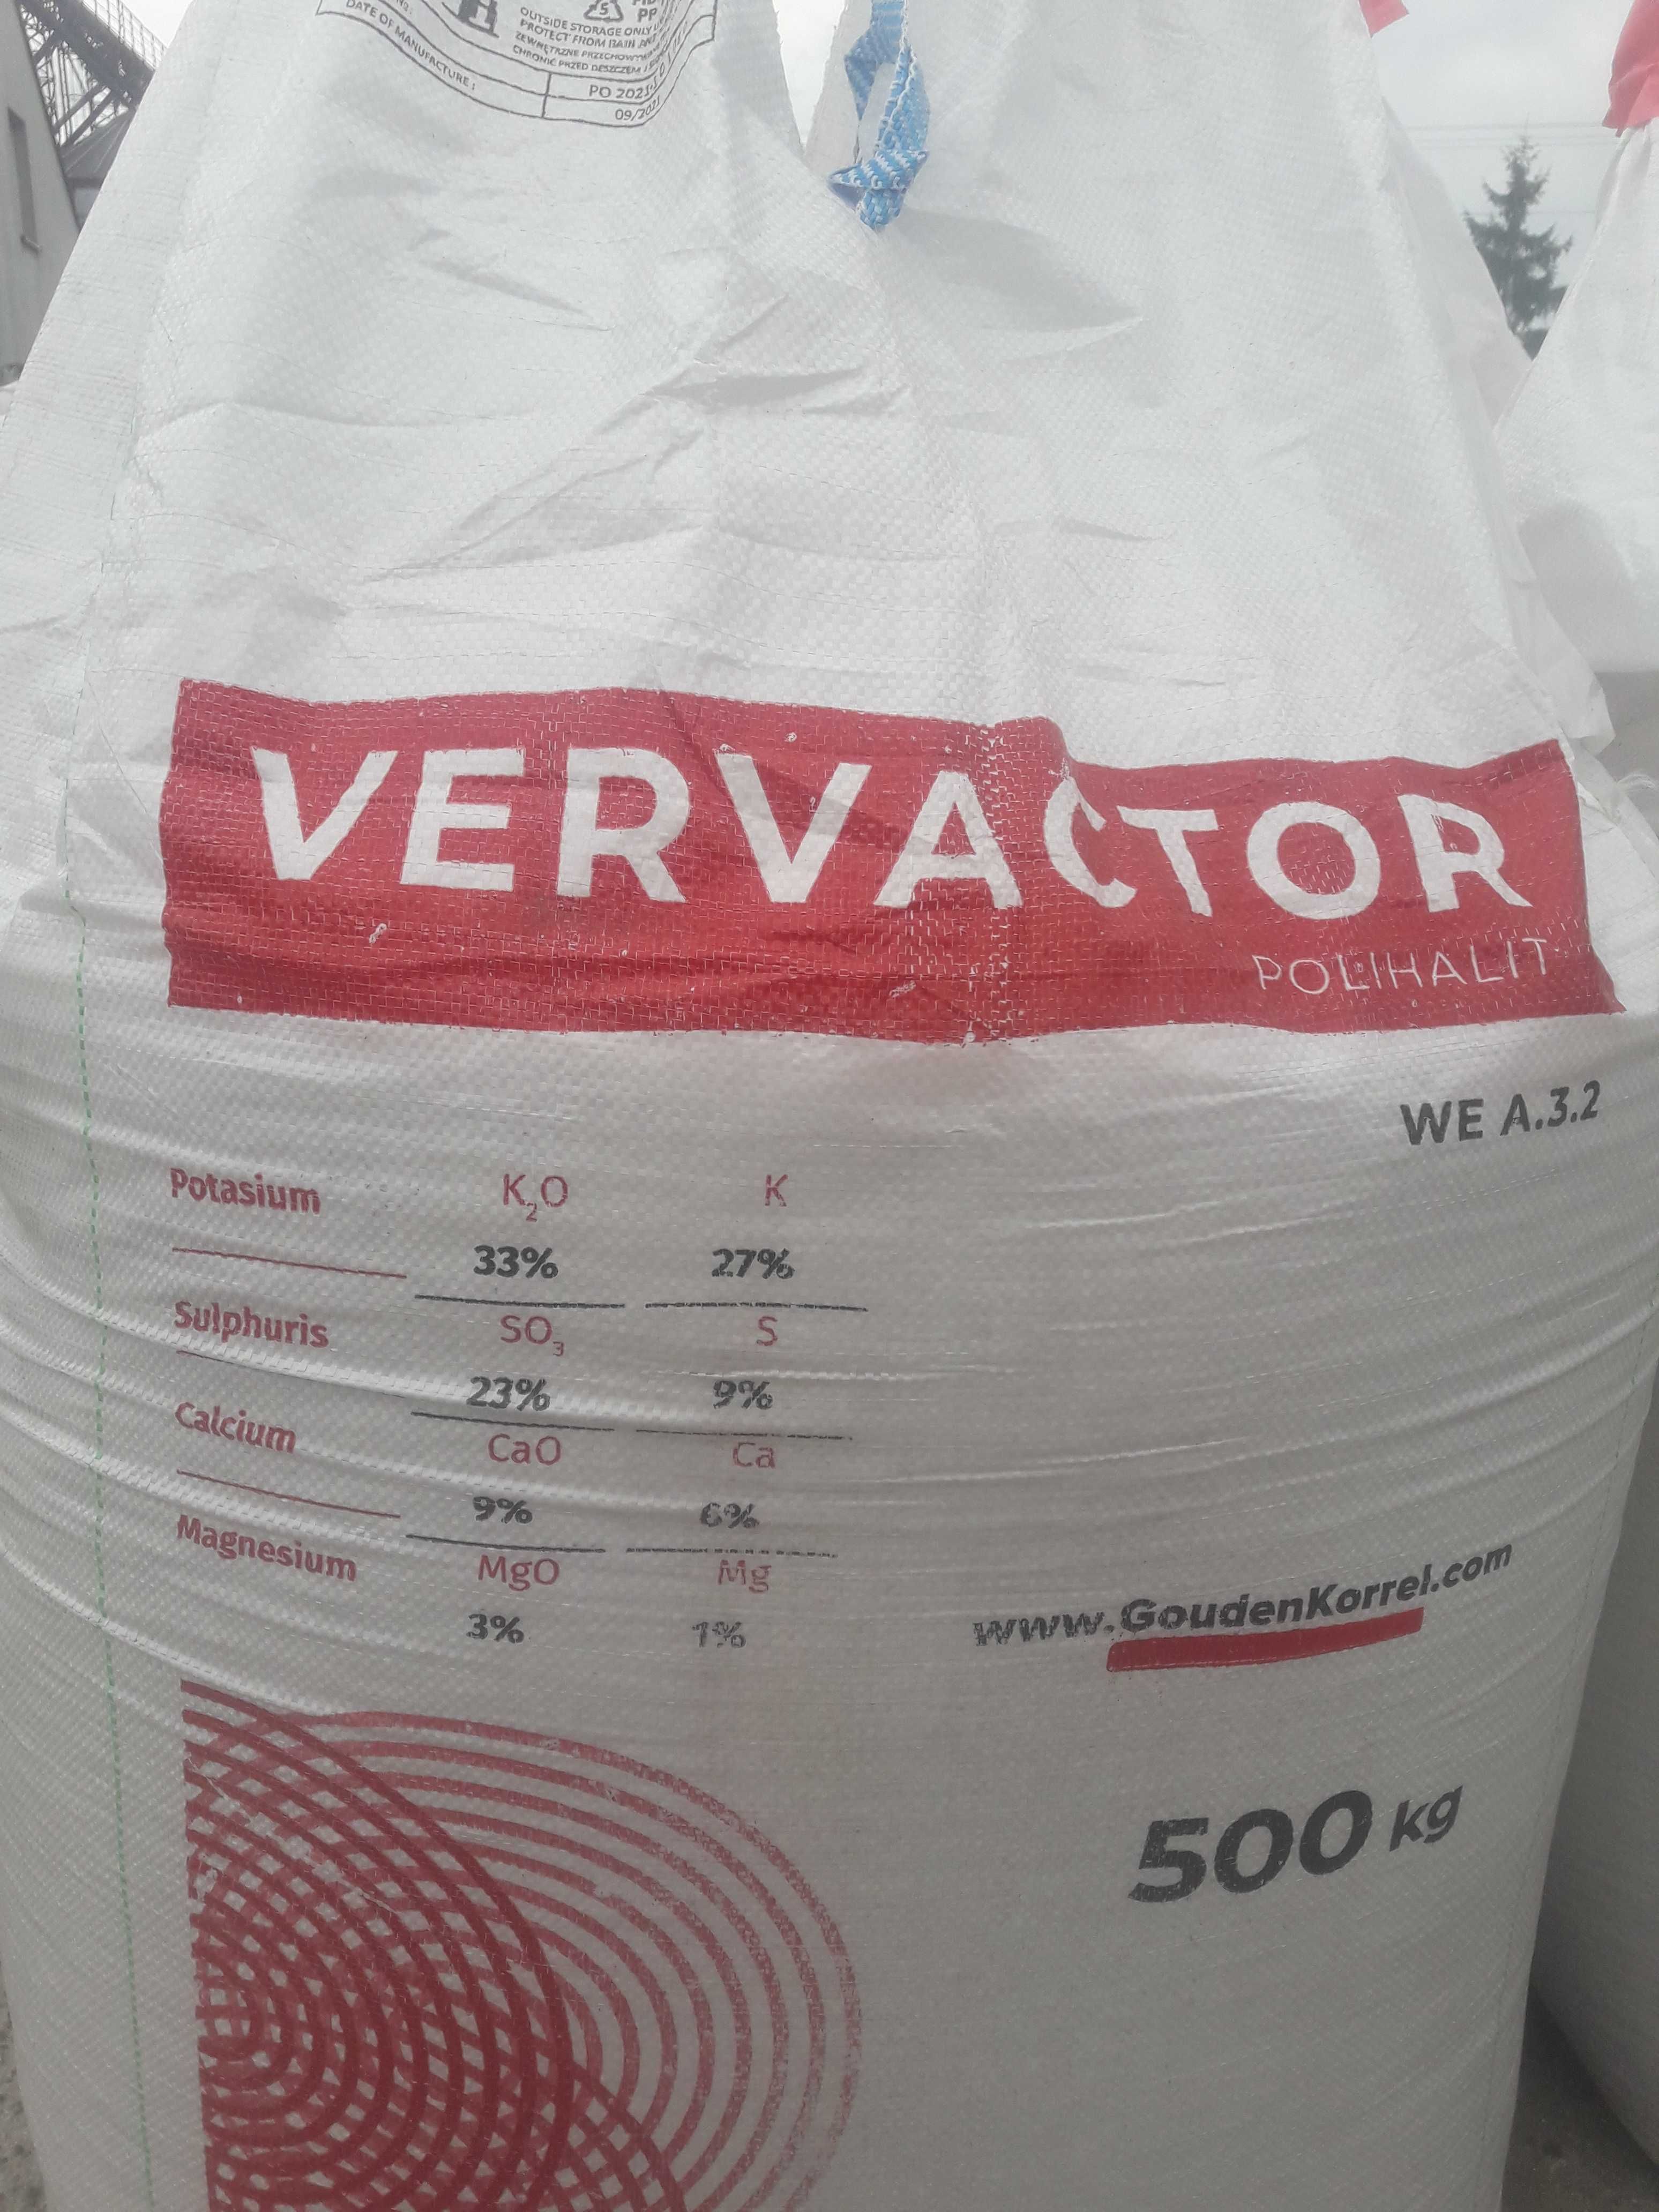 Vervactor (SÓL) 30% K2O duża zawartość siarki